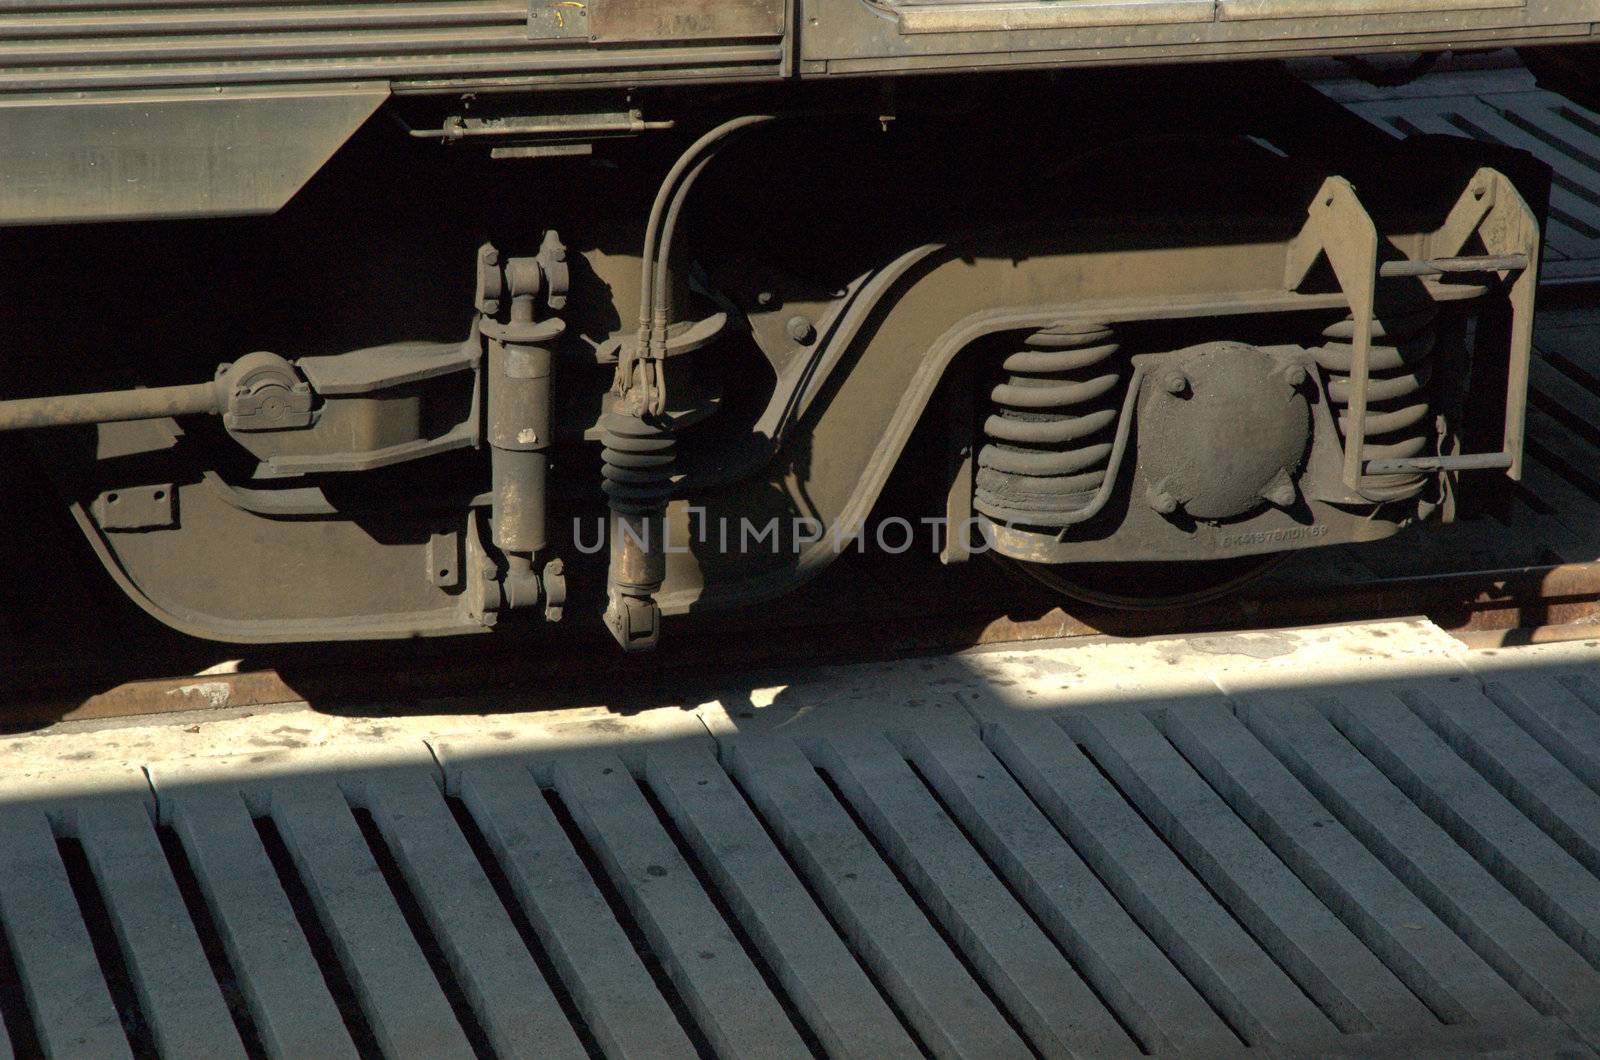 Closeup of train wheels on wooden platform